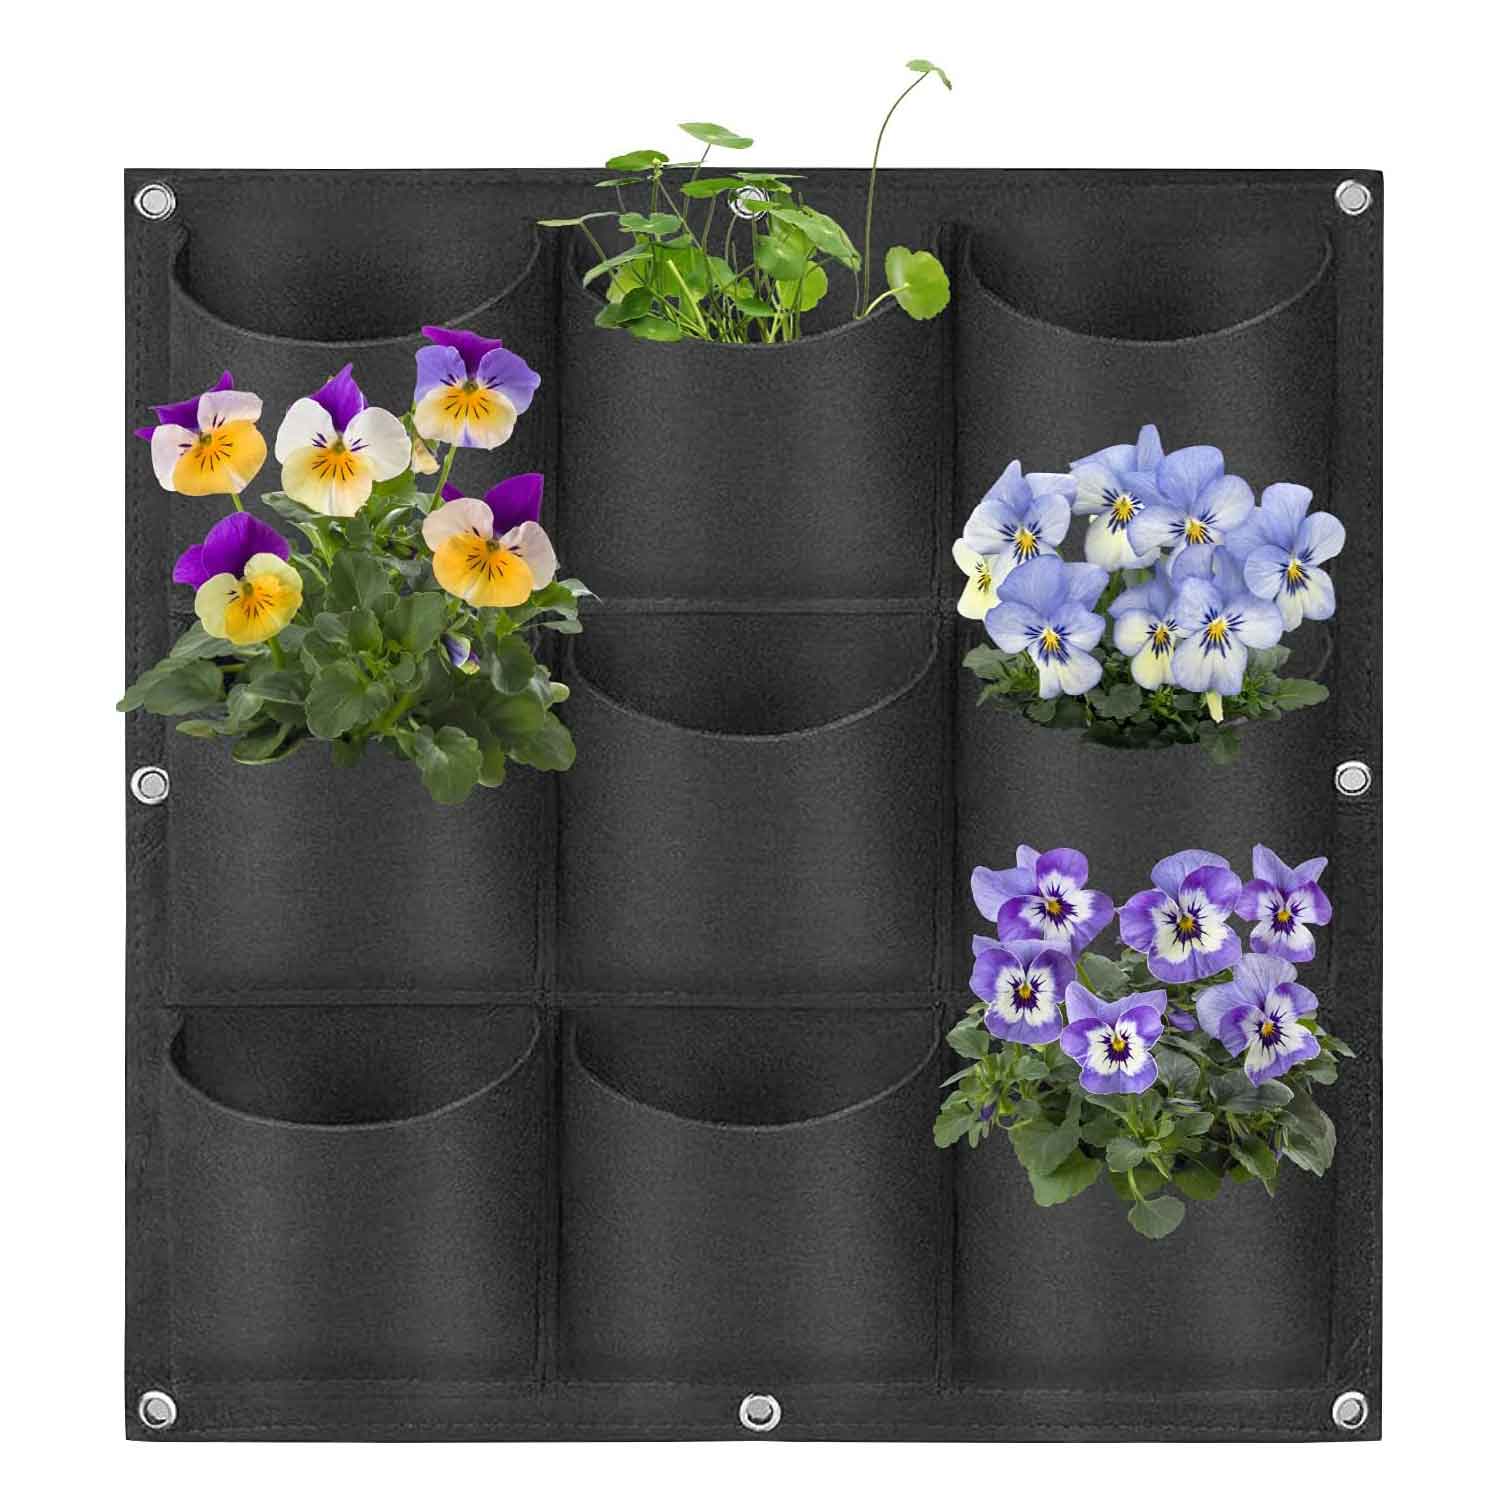 Wall Hanging Planter Planting Grow Bag Vertical Garden Vegetable Flower – Black, 9 Pockets